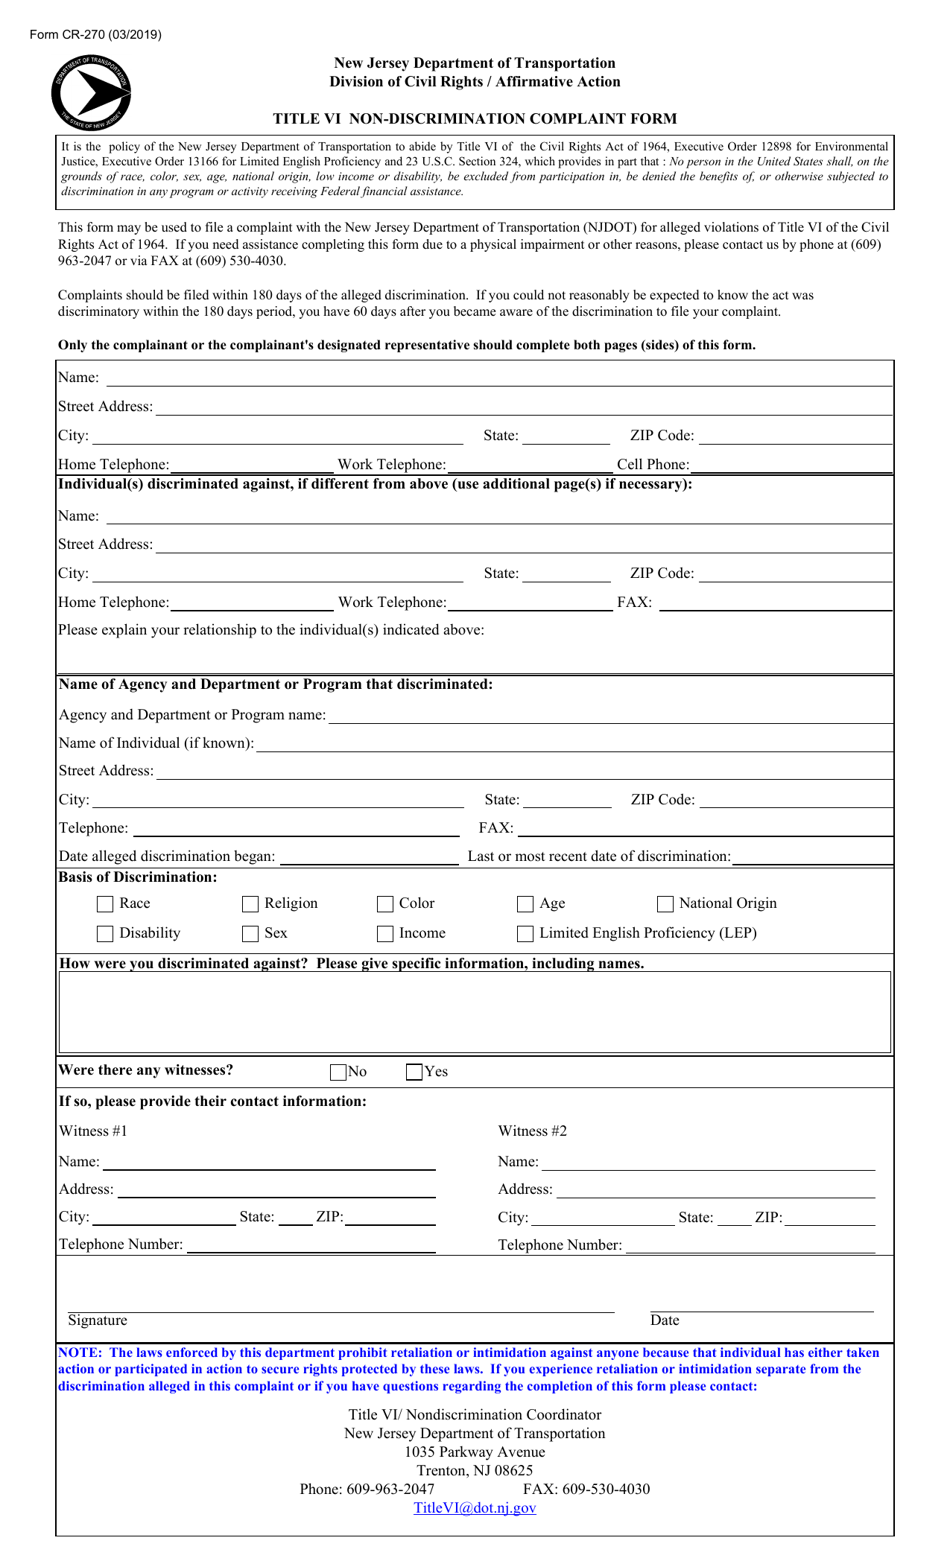 Form CR-270 Title VI Non-discrimination Complaint Form - New Jersey, Page 1